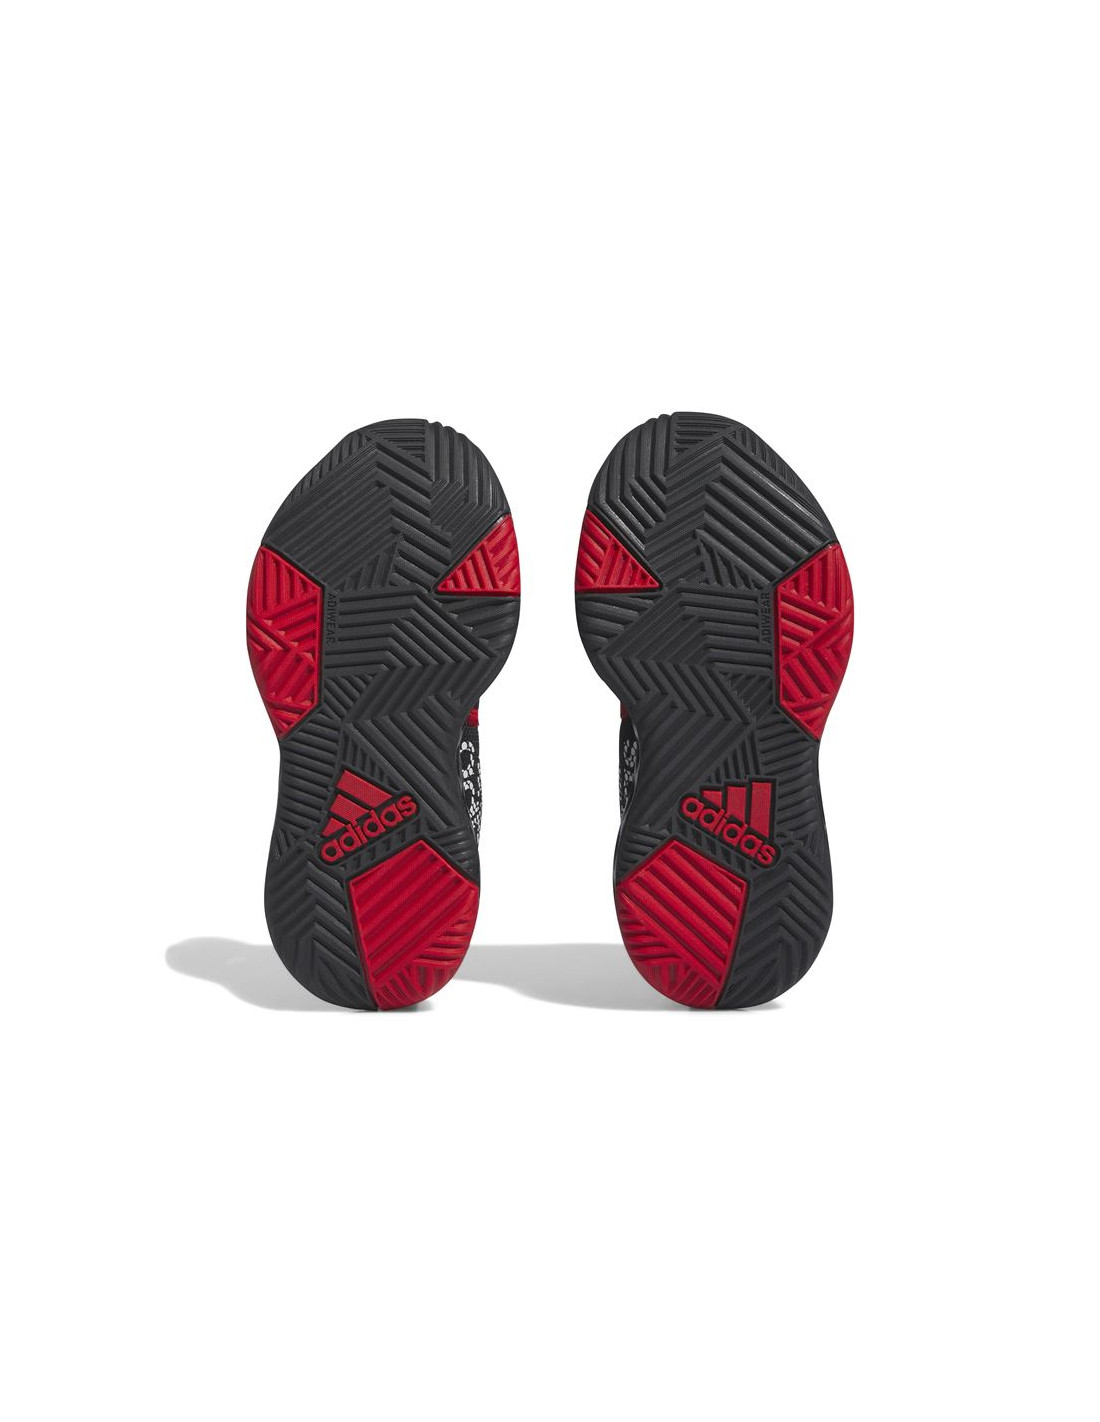 Zapatillas baloncesto adidas Ownthegame 2.0 rojo blanco hombre